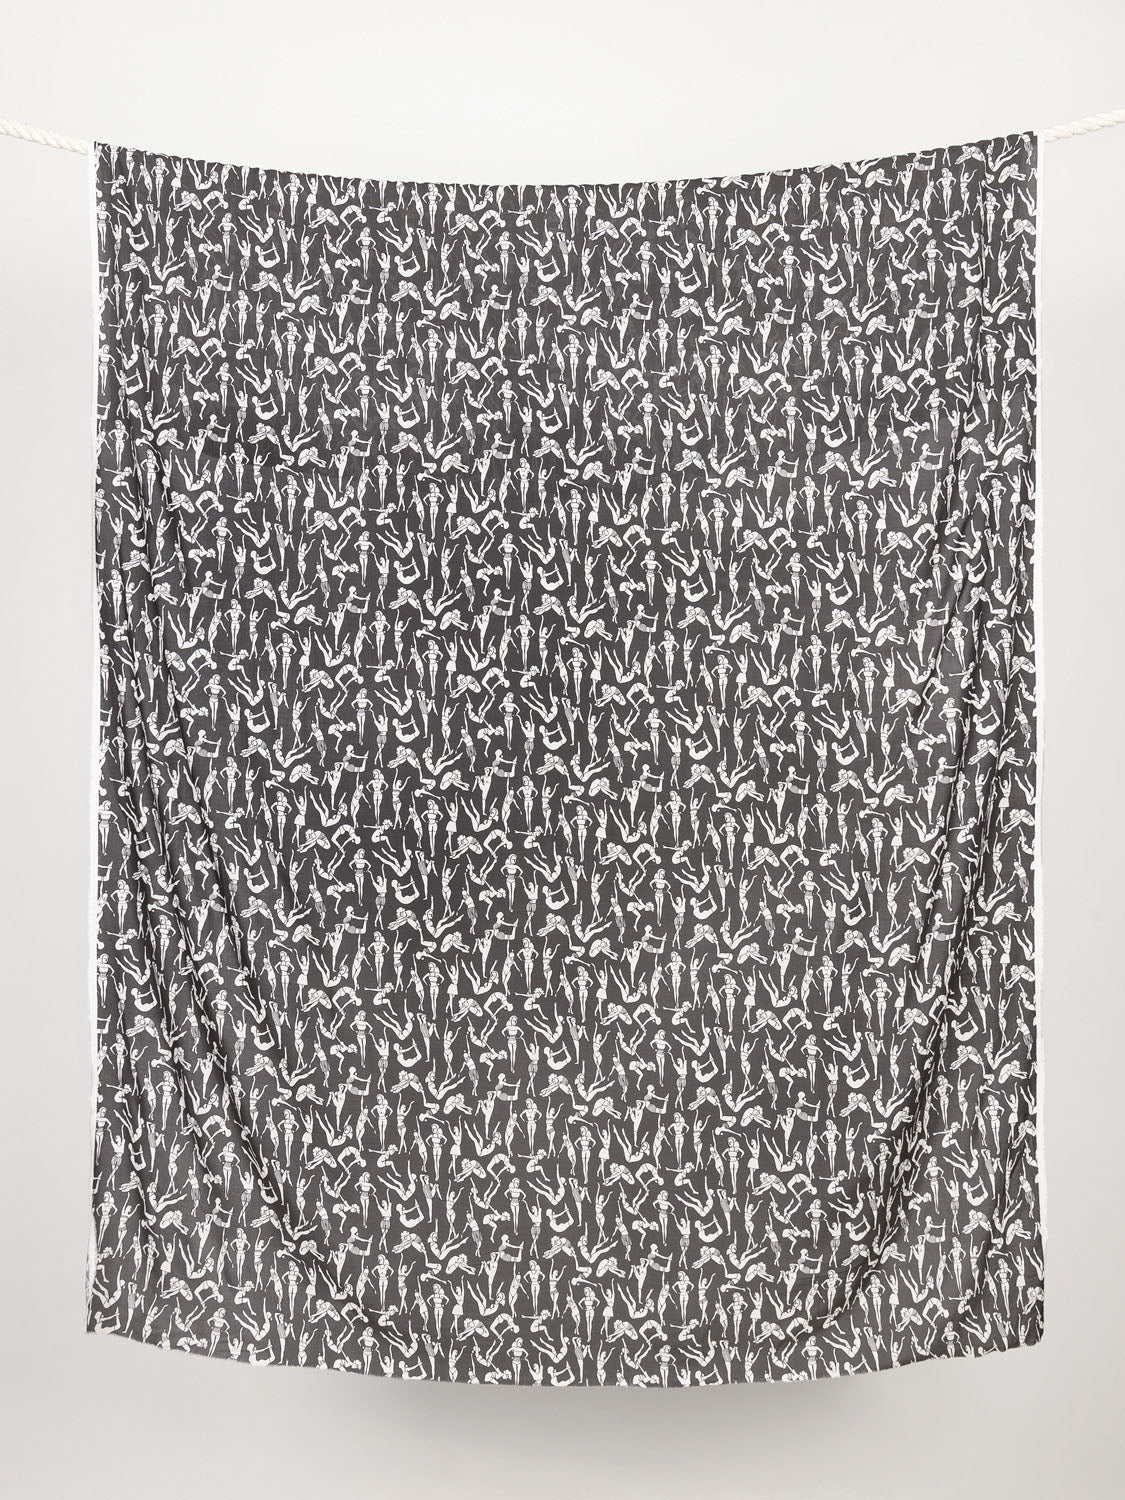 Summer Frolic Print EcoVero Rayon Challis - Black + White | Core Fabrics